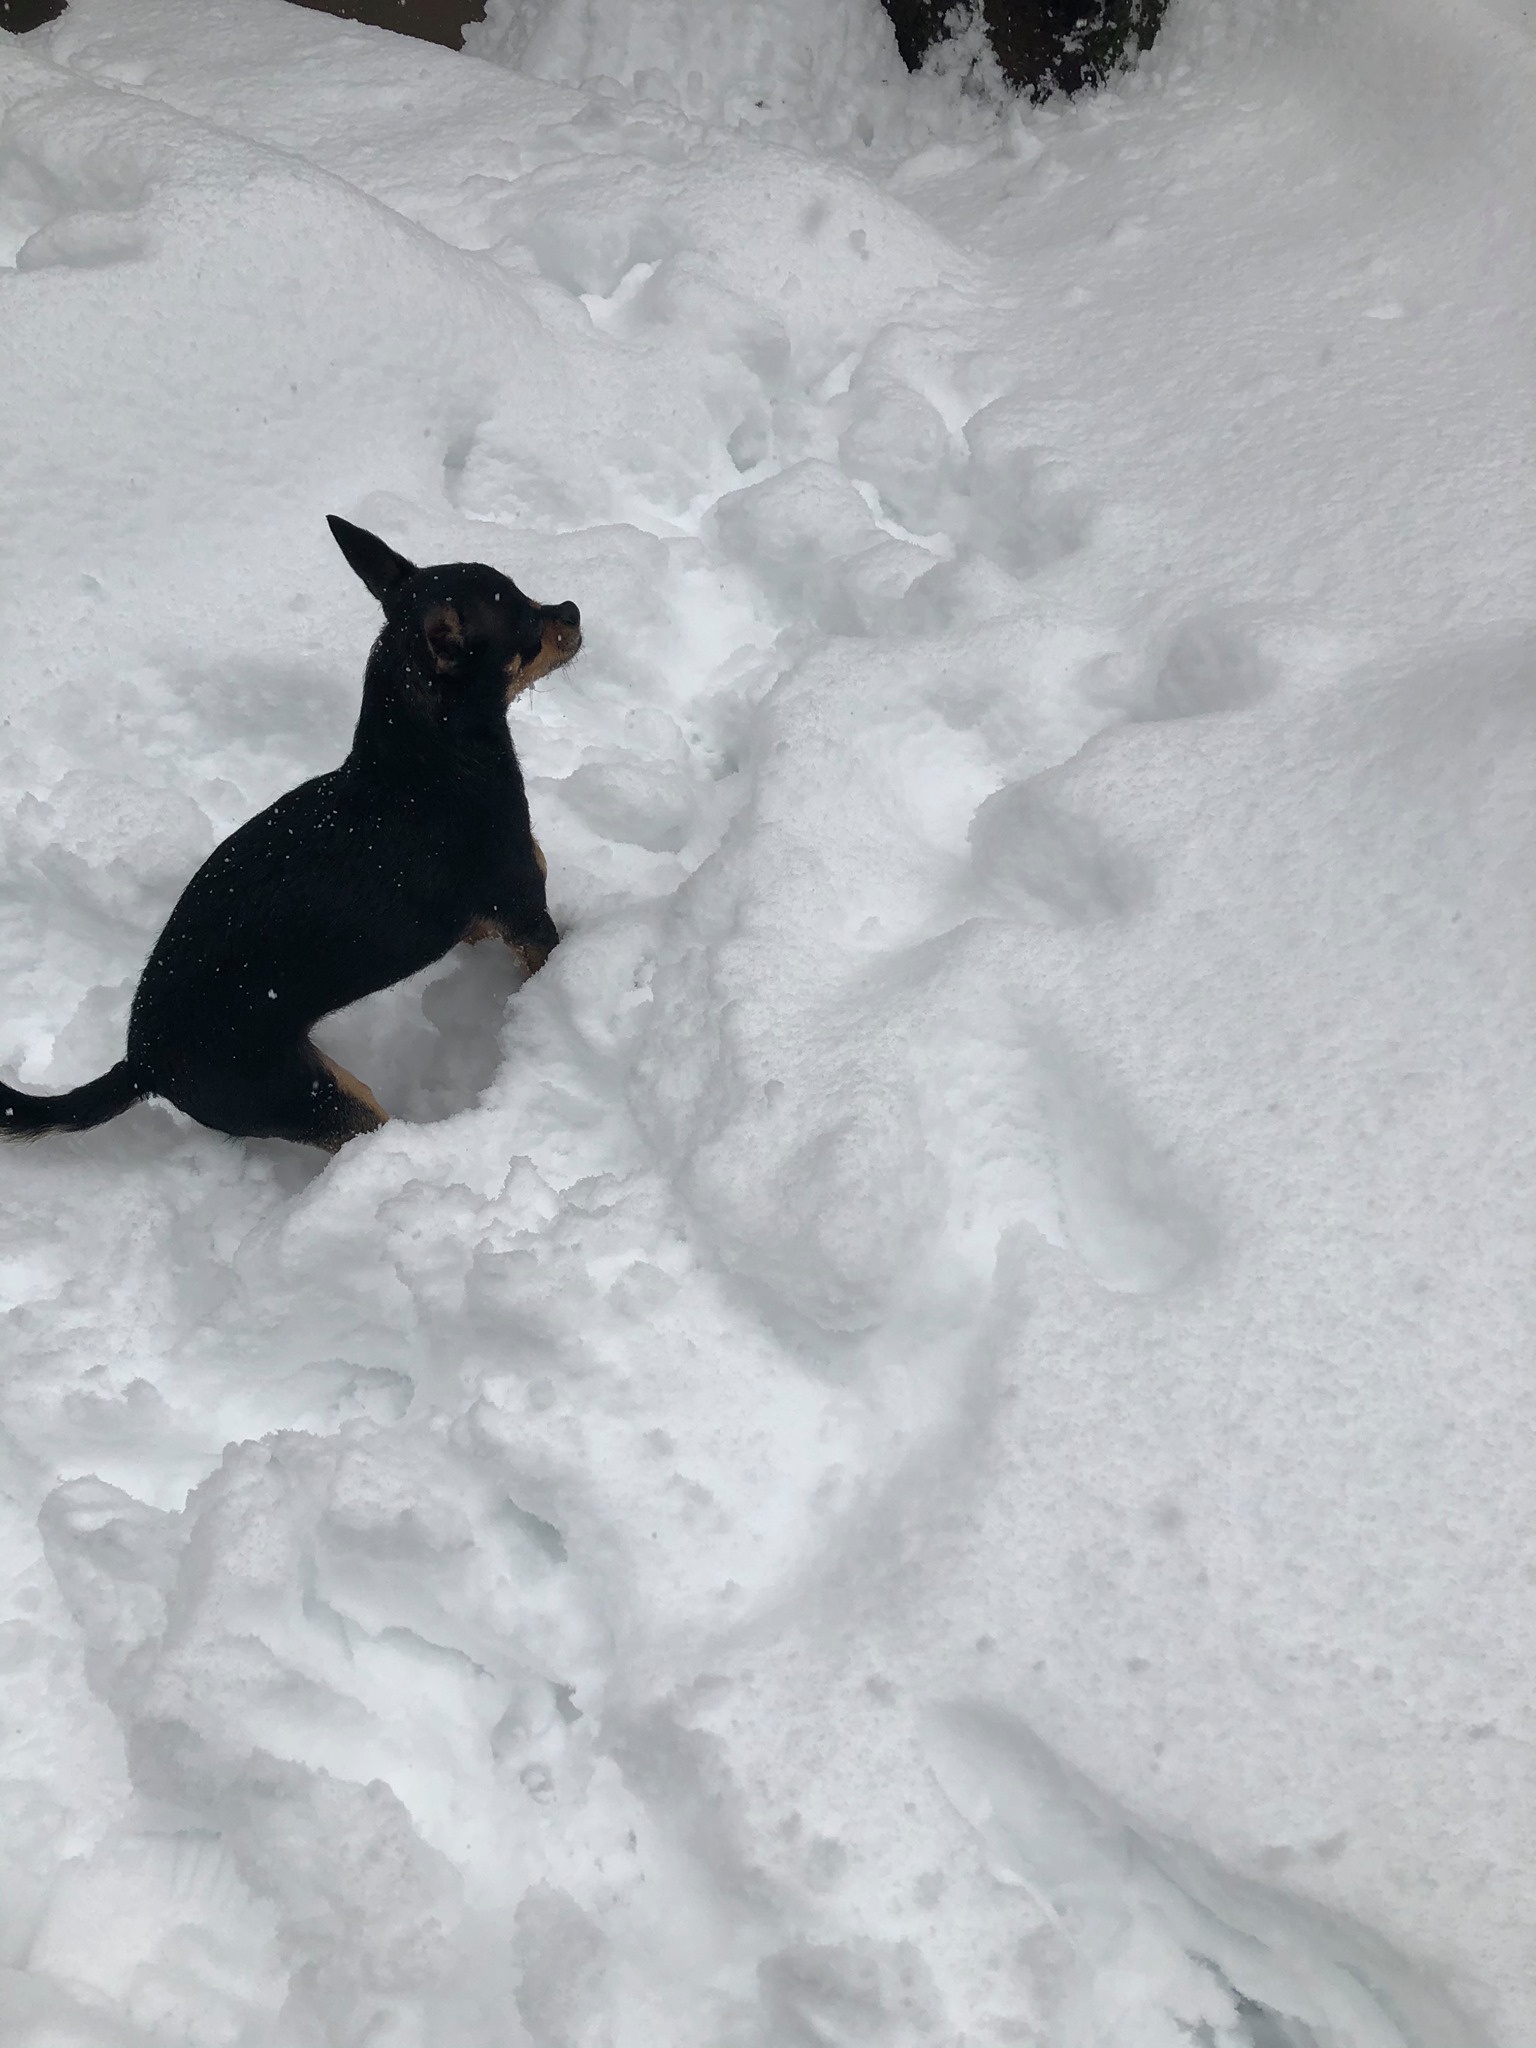 Doggos in snow!